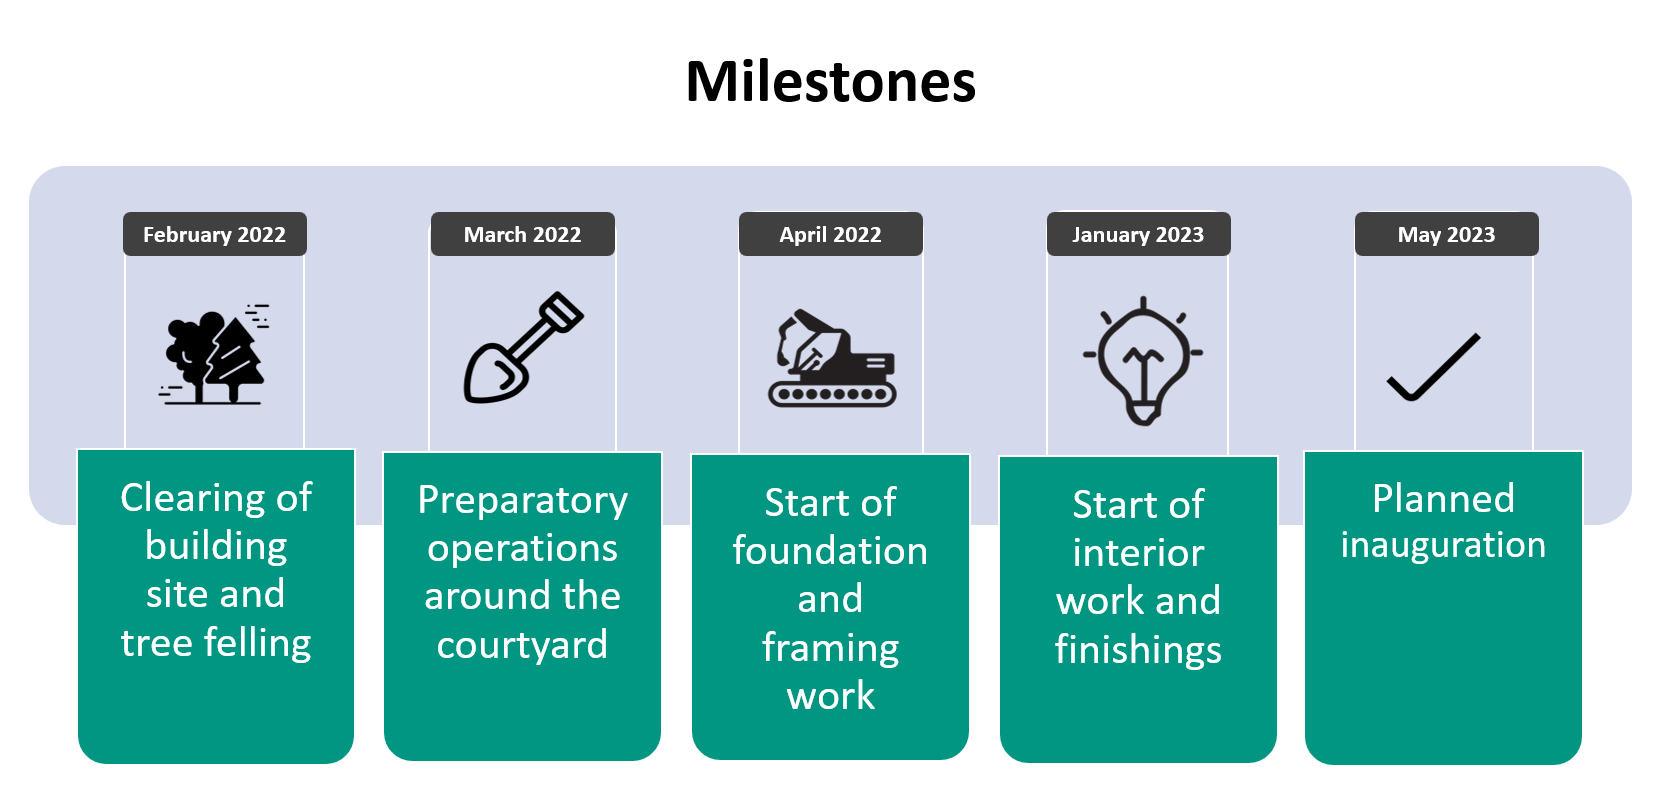 Milestones of the reconstruction